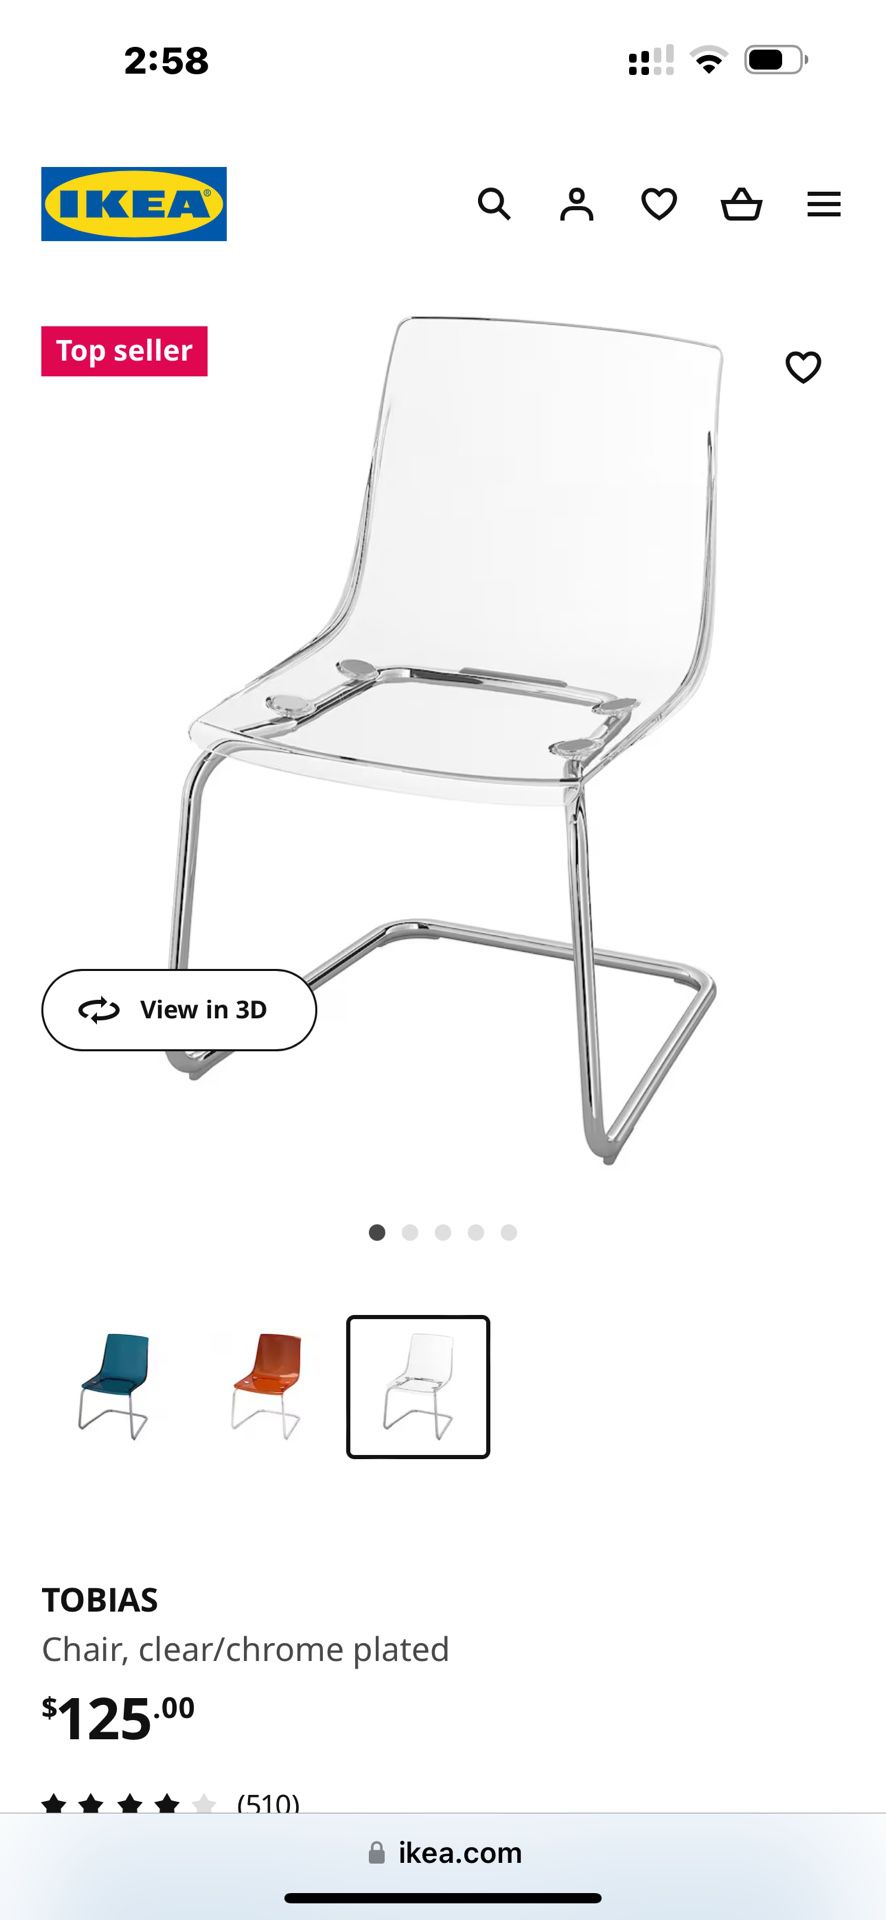 Clear Tobias IKEA Chairs